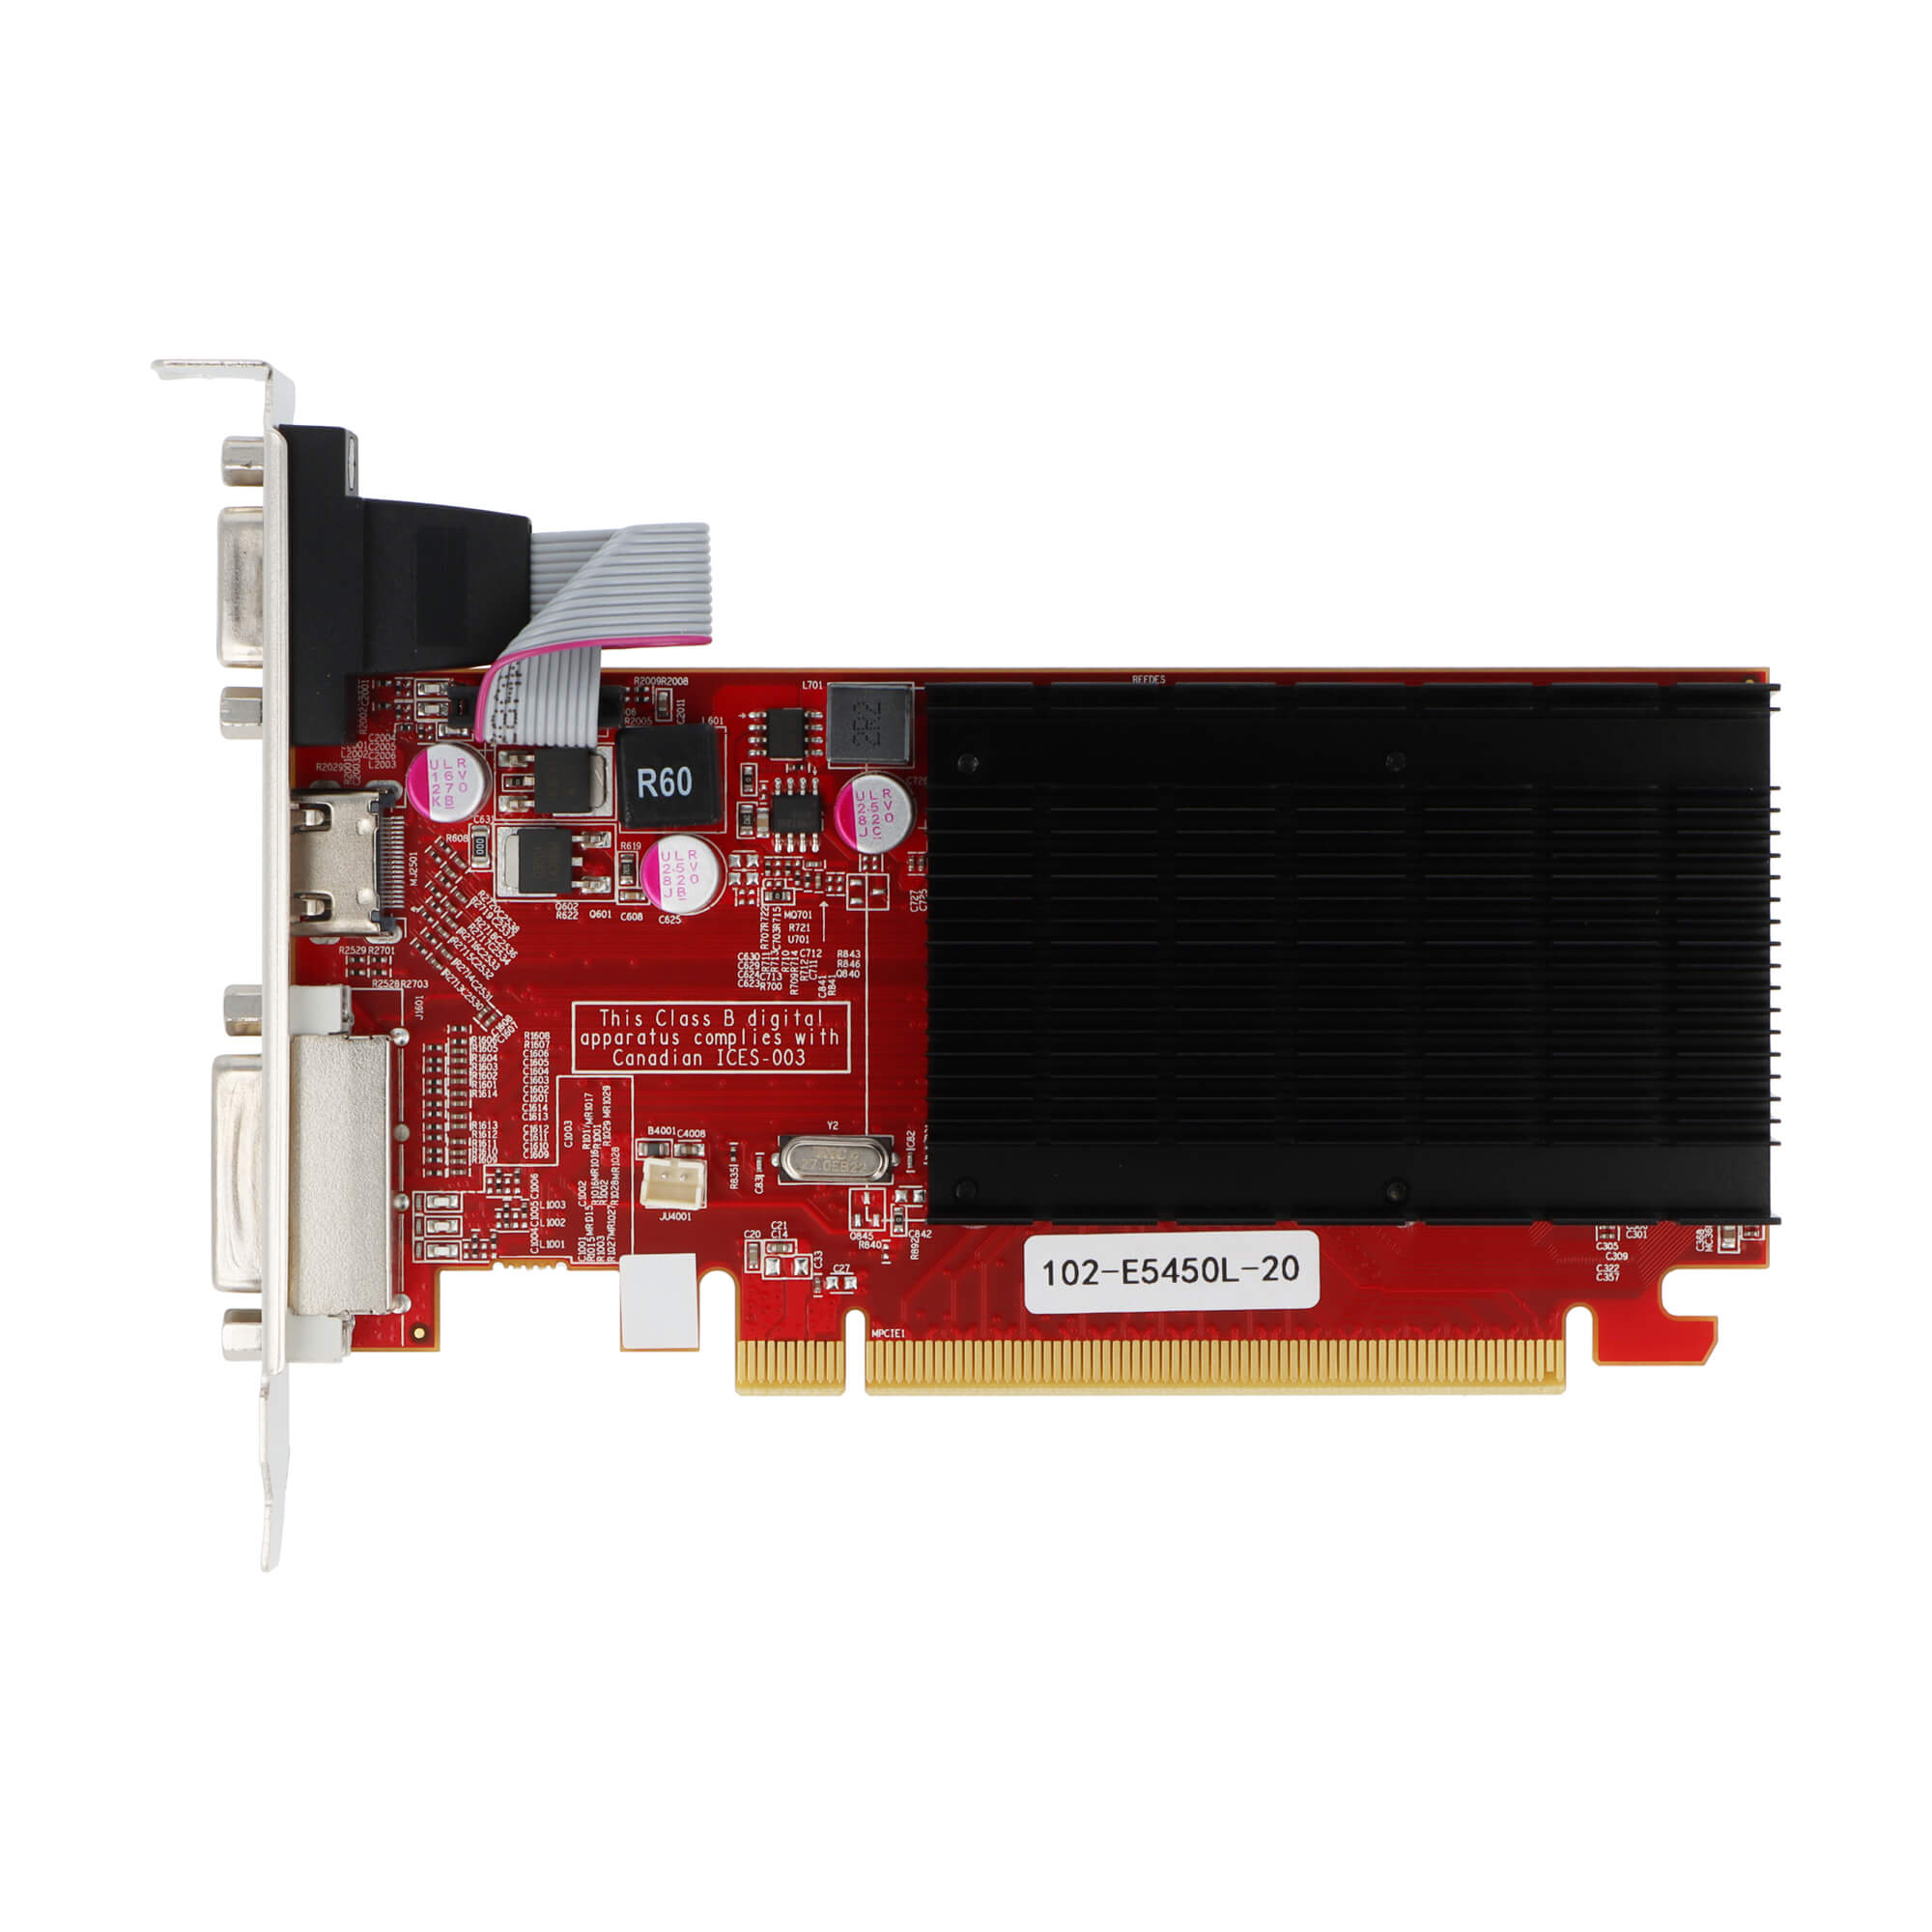 Radeon HD 5450 2GB GDDR3 (DVI-I, HDMI, VGA) – VisionTek.com